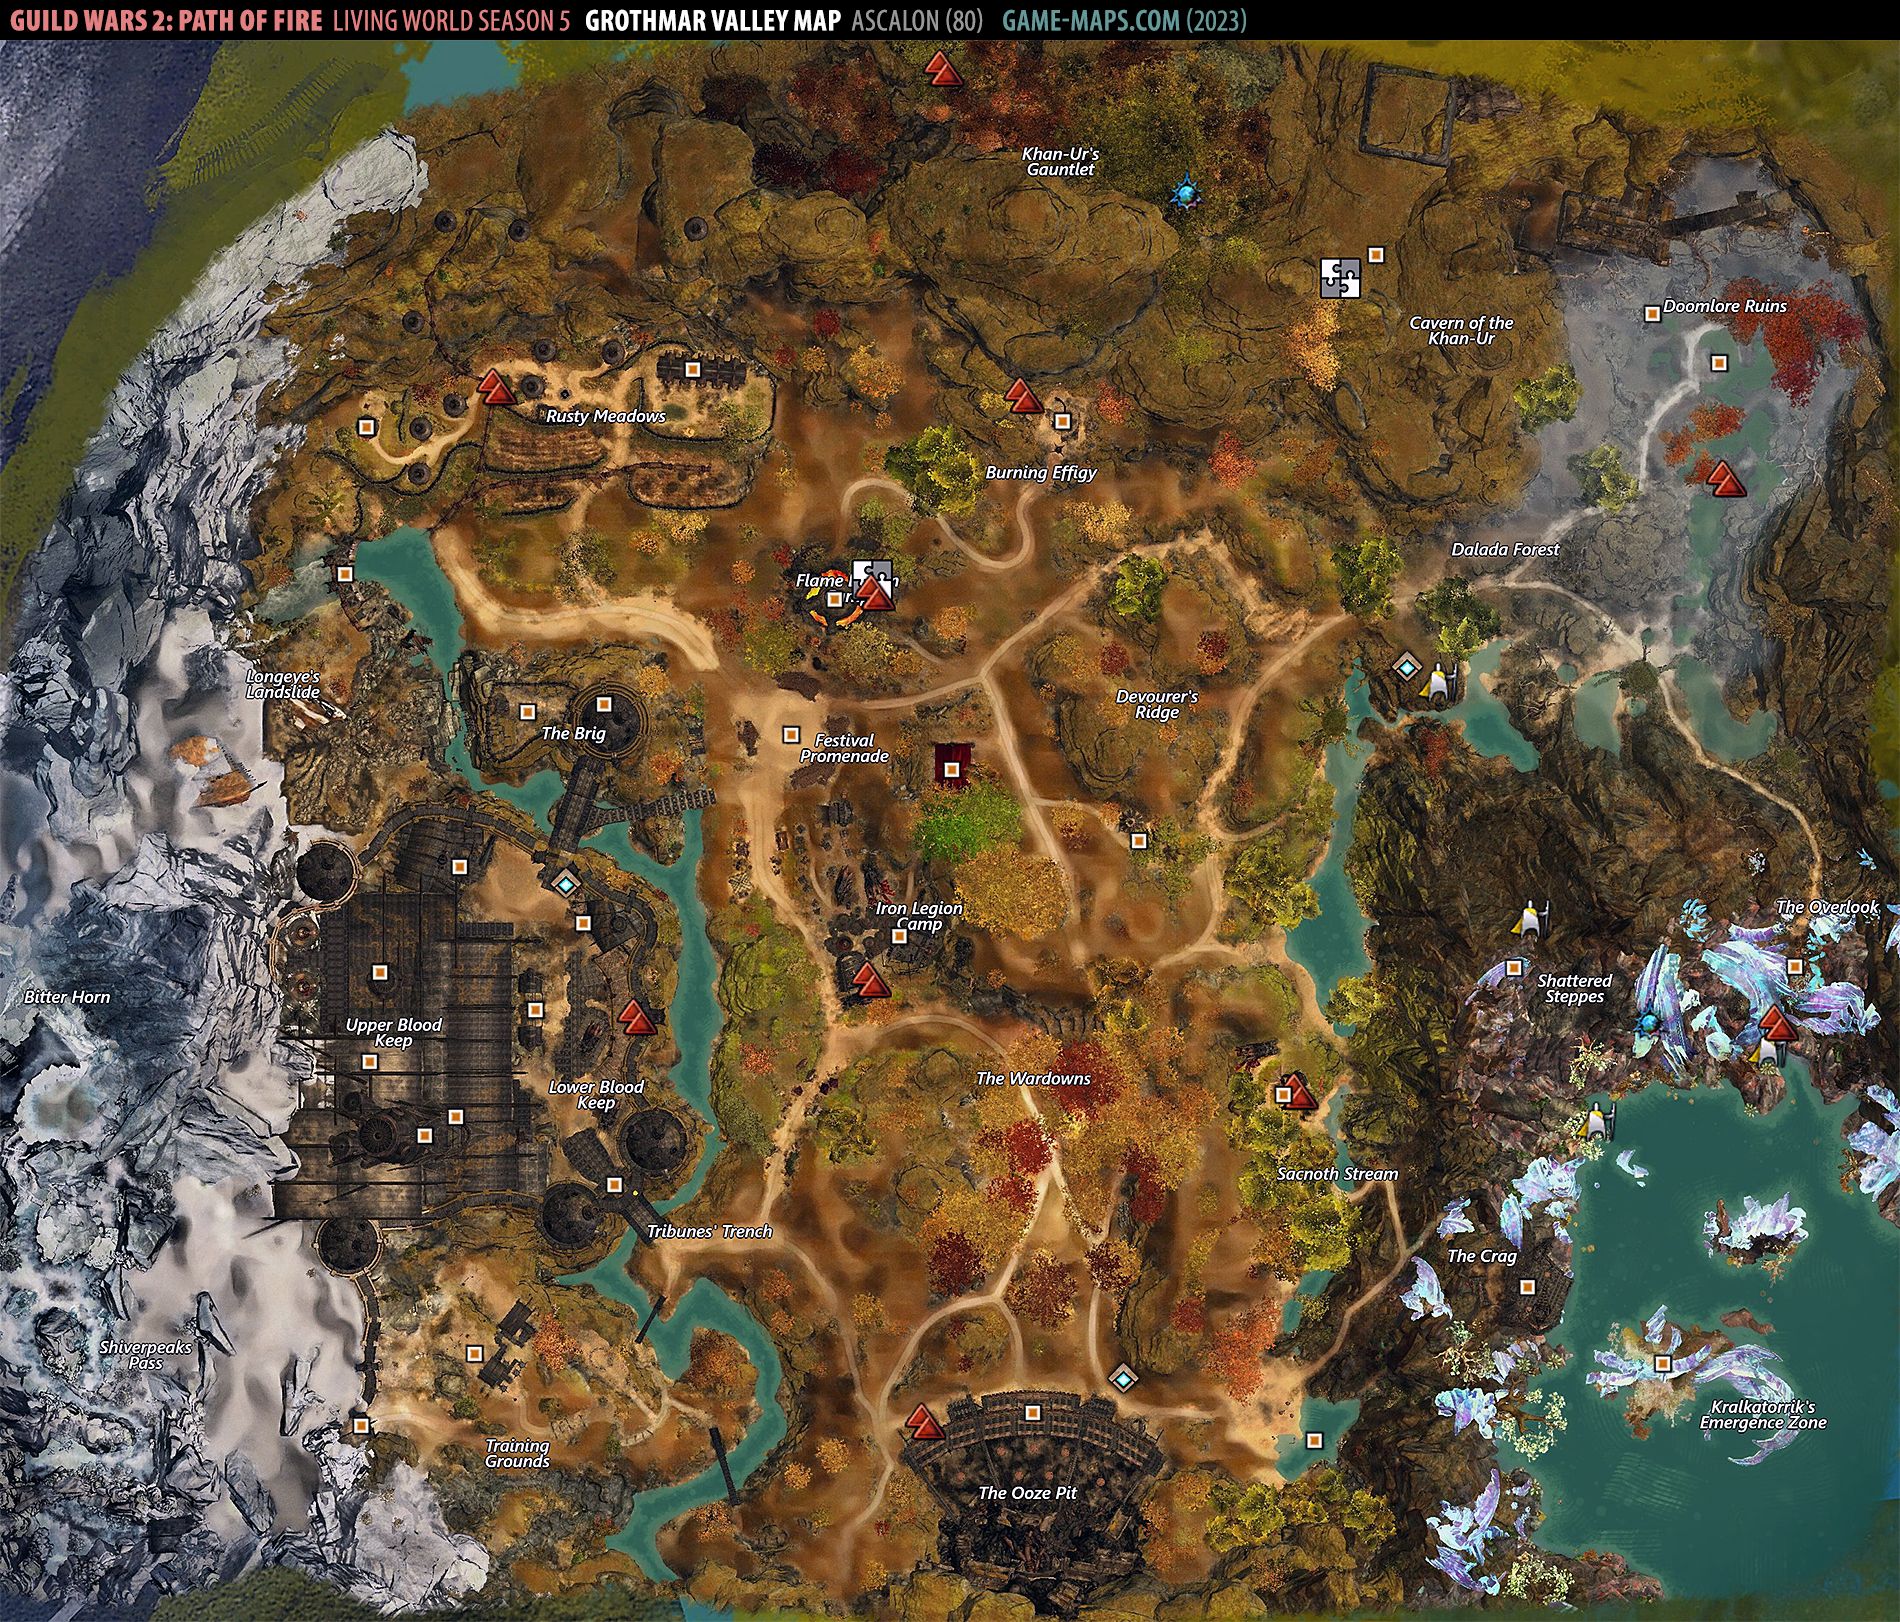 Grothmar Valley Map for Guild Wars 2 (2019)